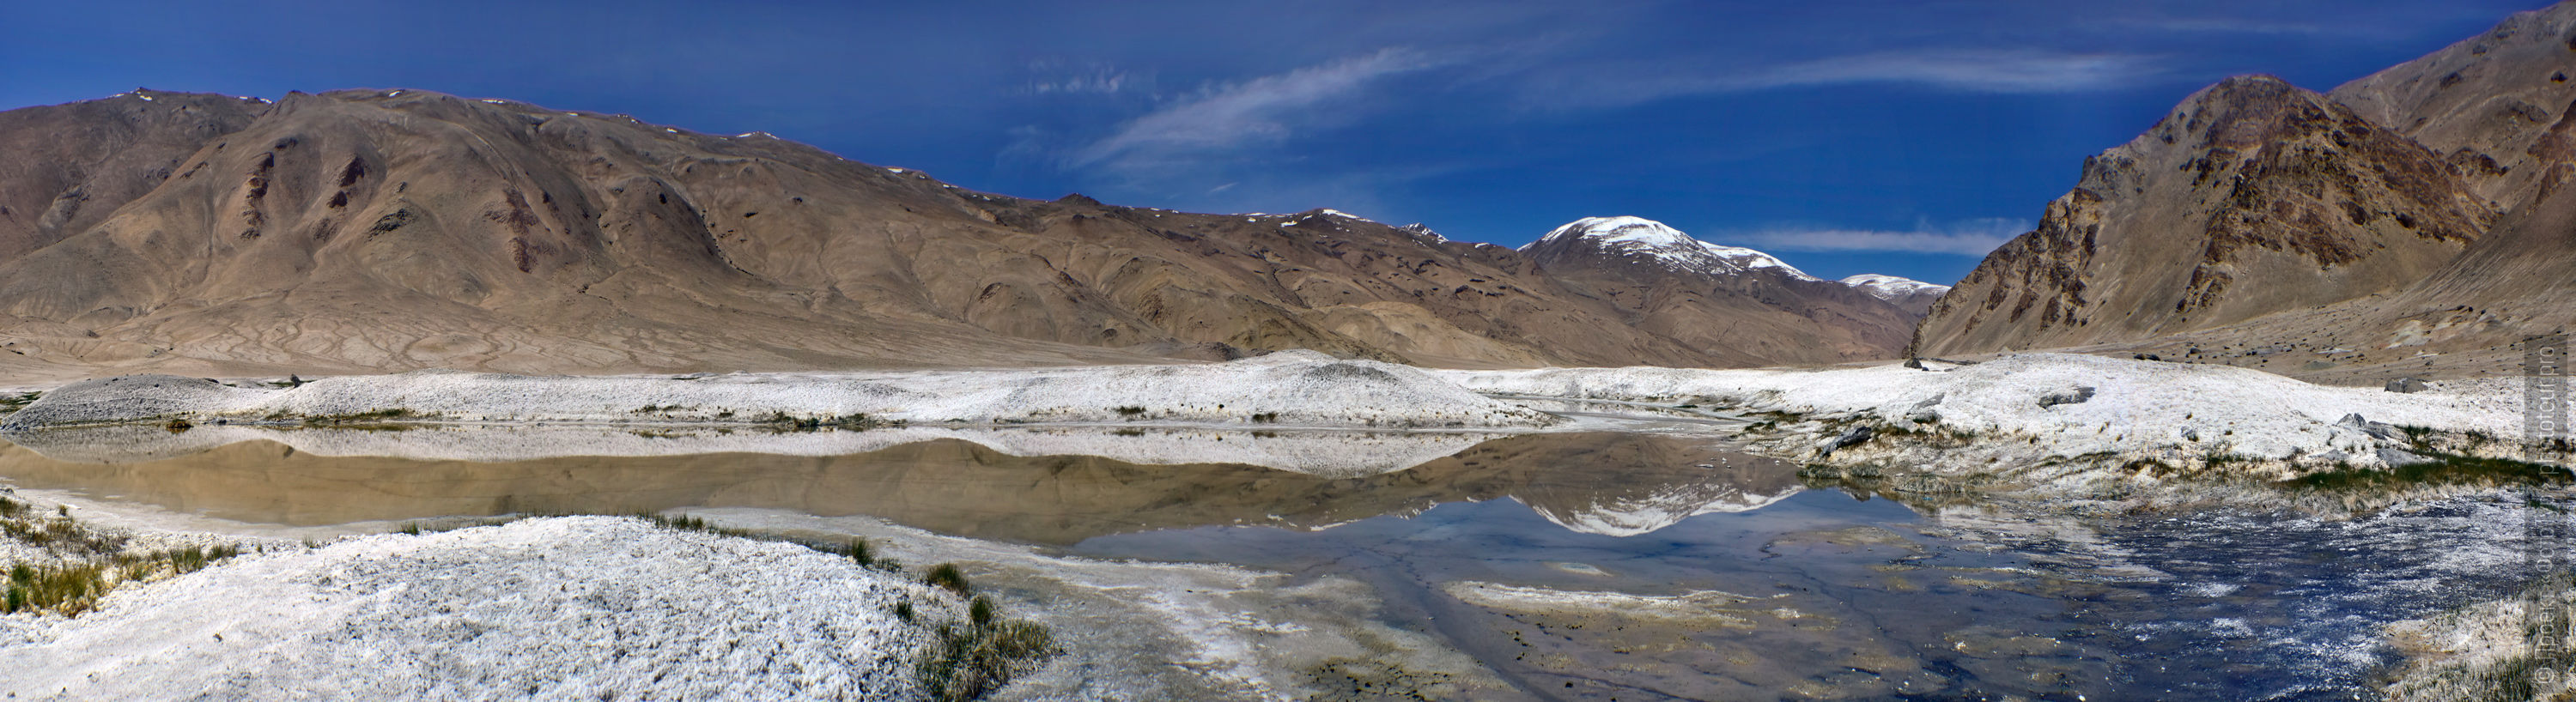 Highland valley of geysers, Ladakh women’s tour, August 31 - September 14, 2019.